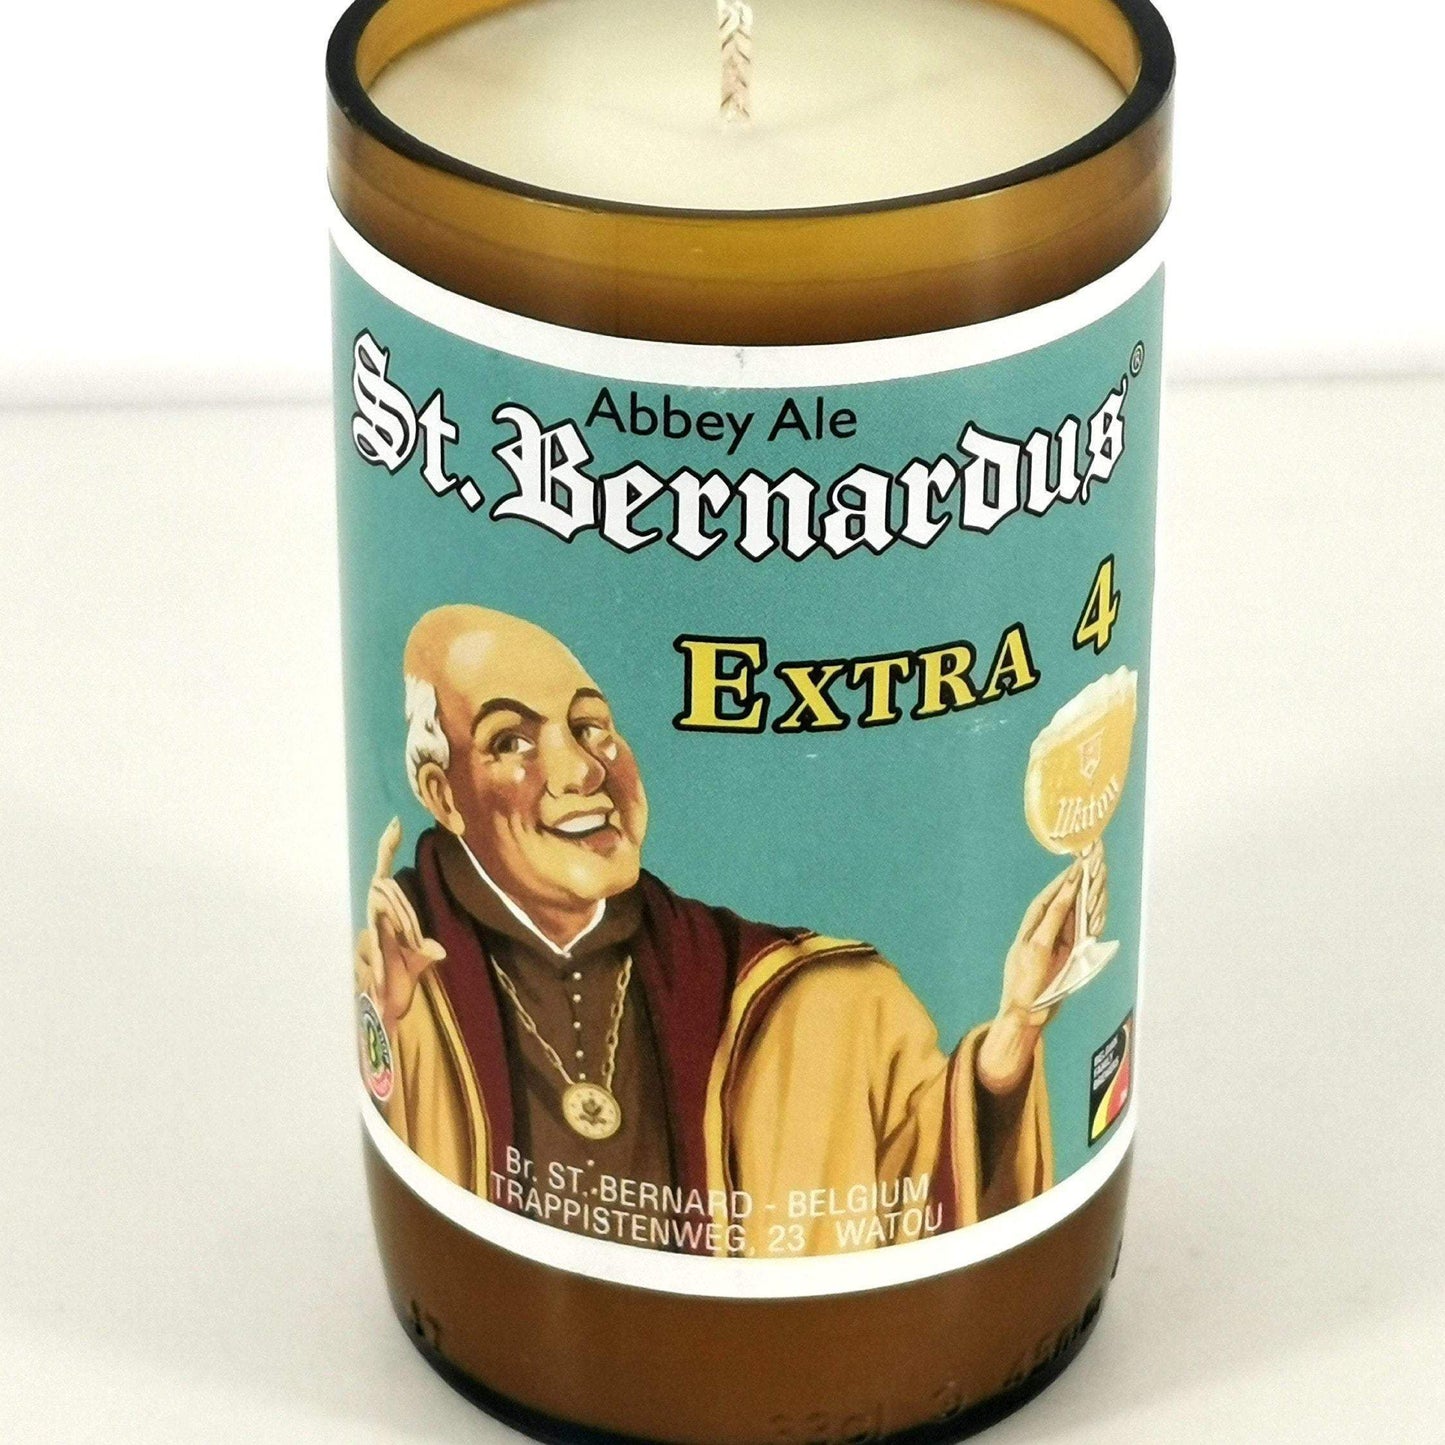 St Bernardus Abt 12 Abbey Bottle Candle-Beer & Ale Bottle Candles-Adhock Homeware